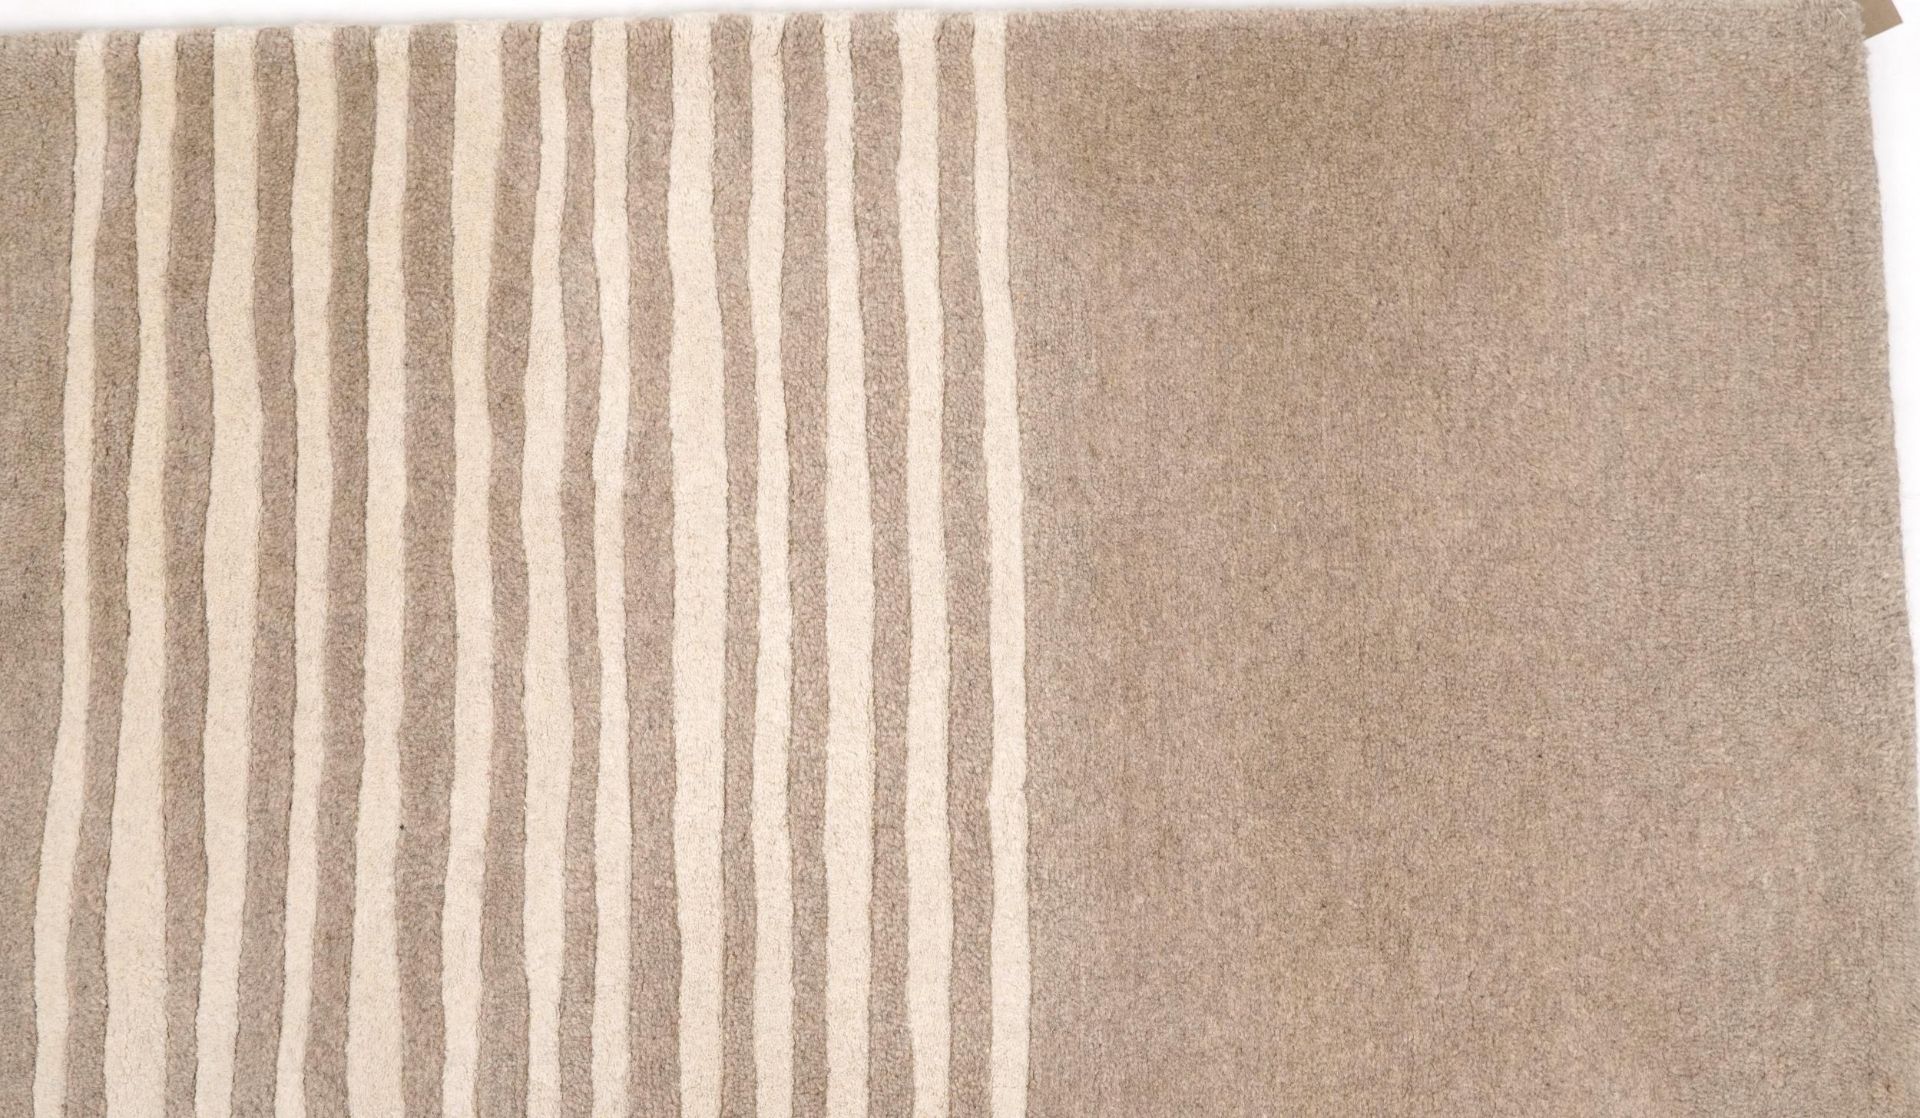 Pair of Kelaty contemporary wool rugs, 180cm x 120cm - Image 4 of 16